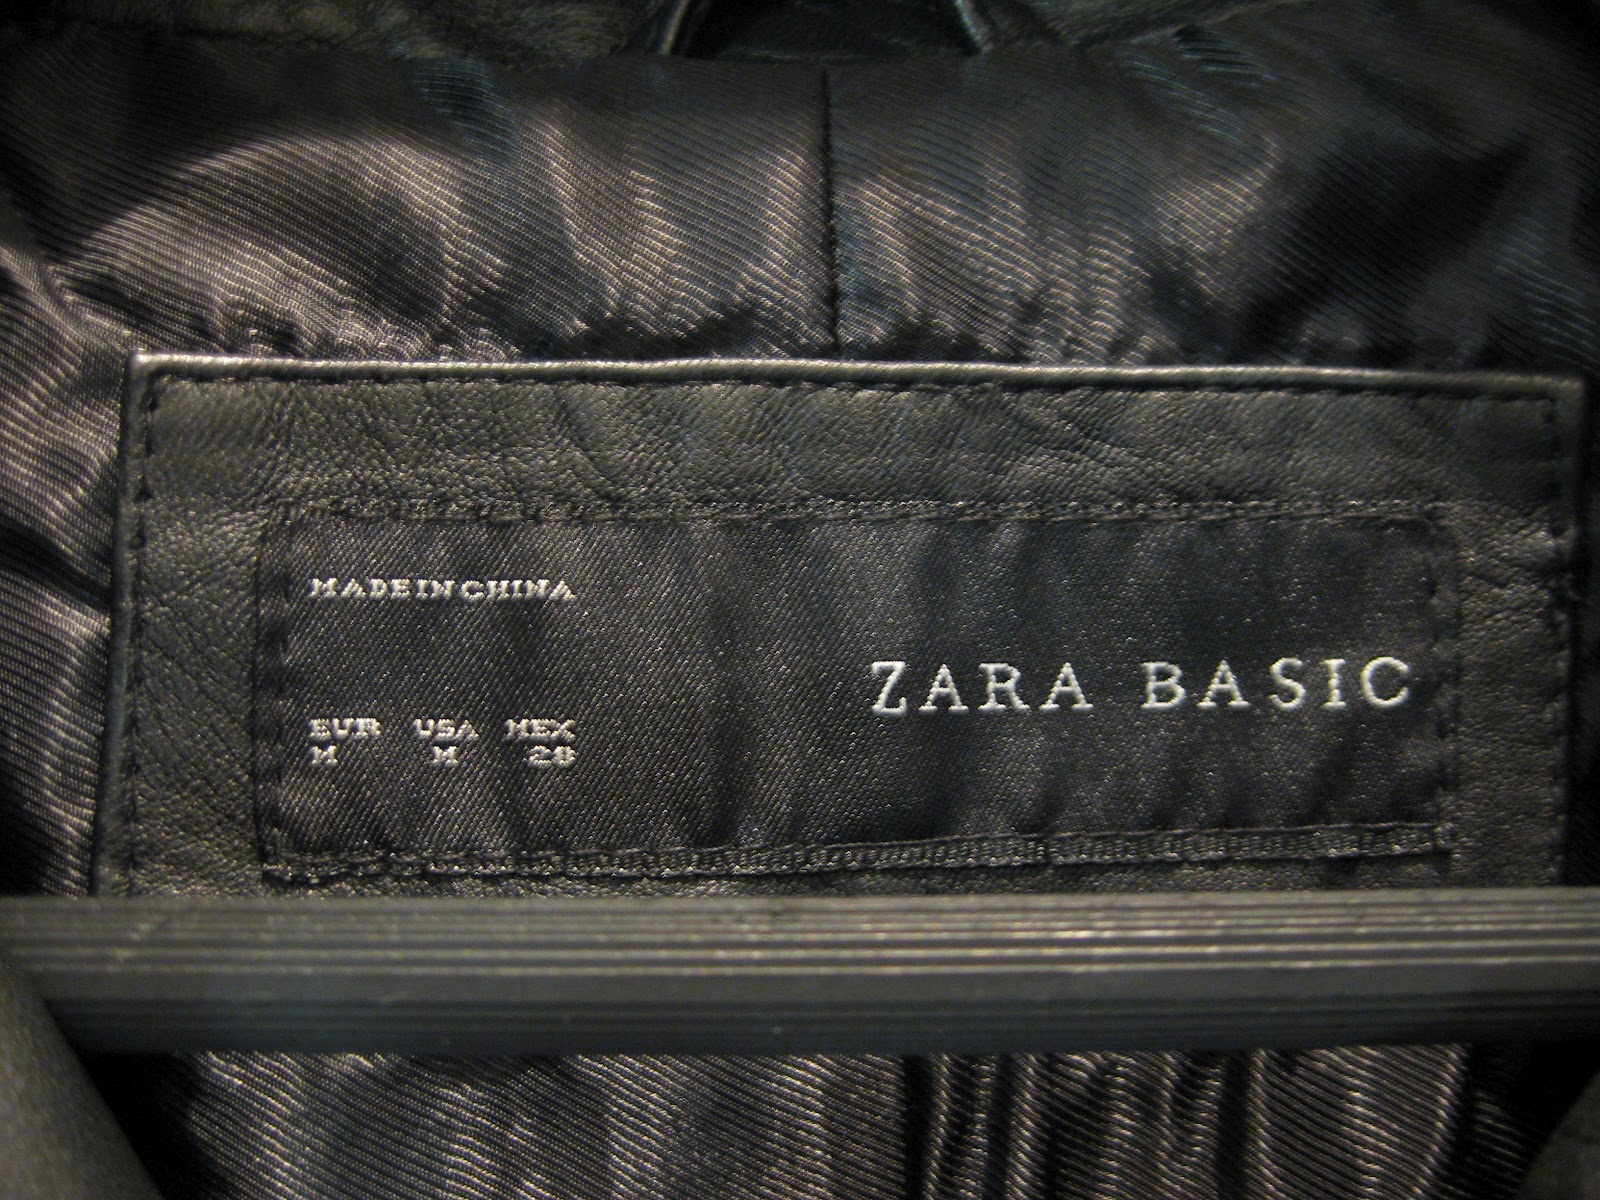 zara basics jacket